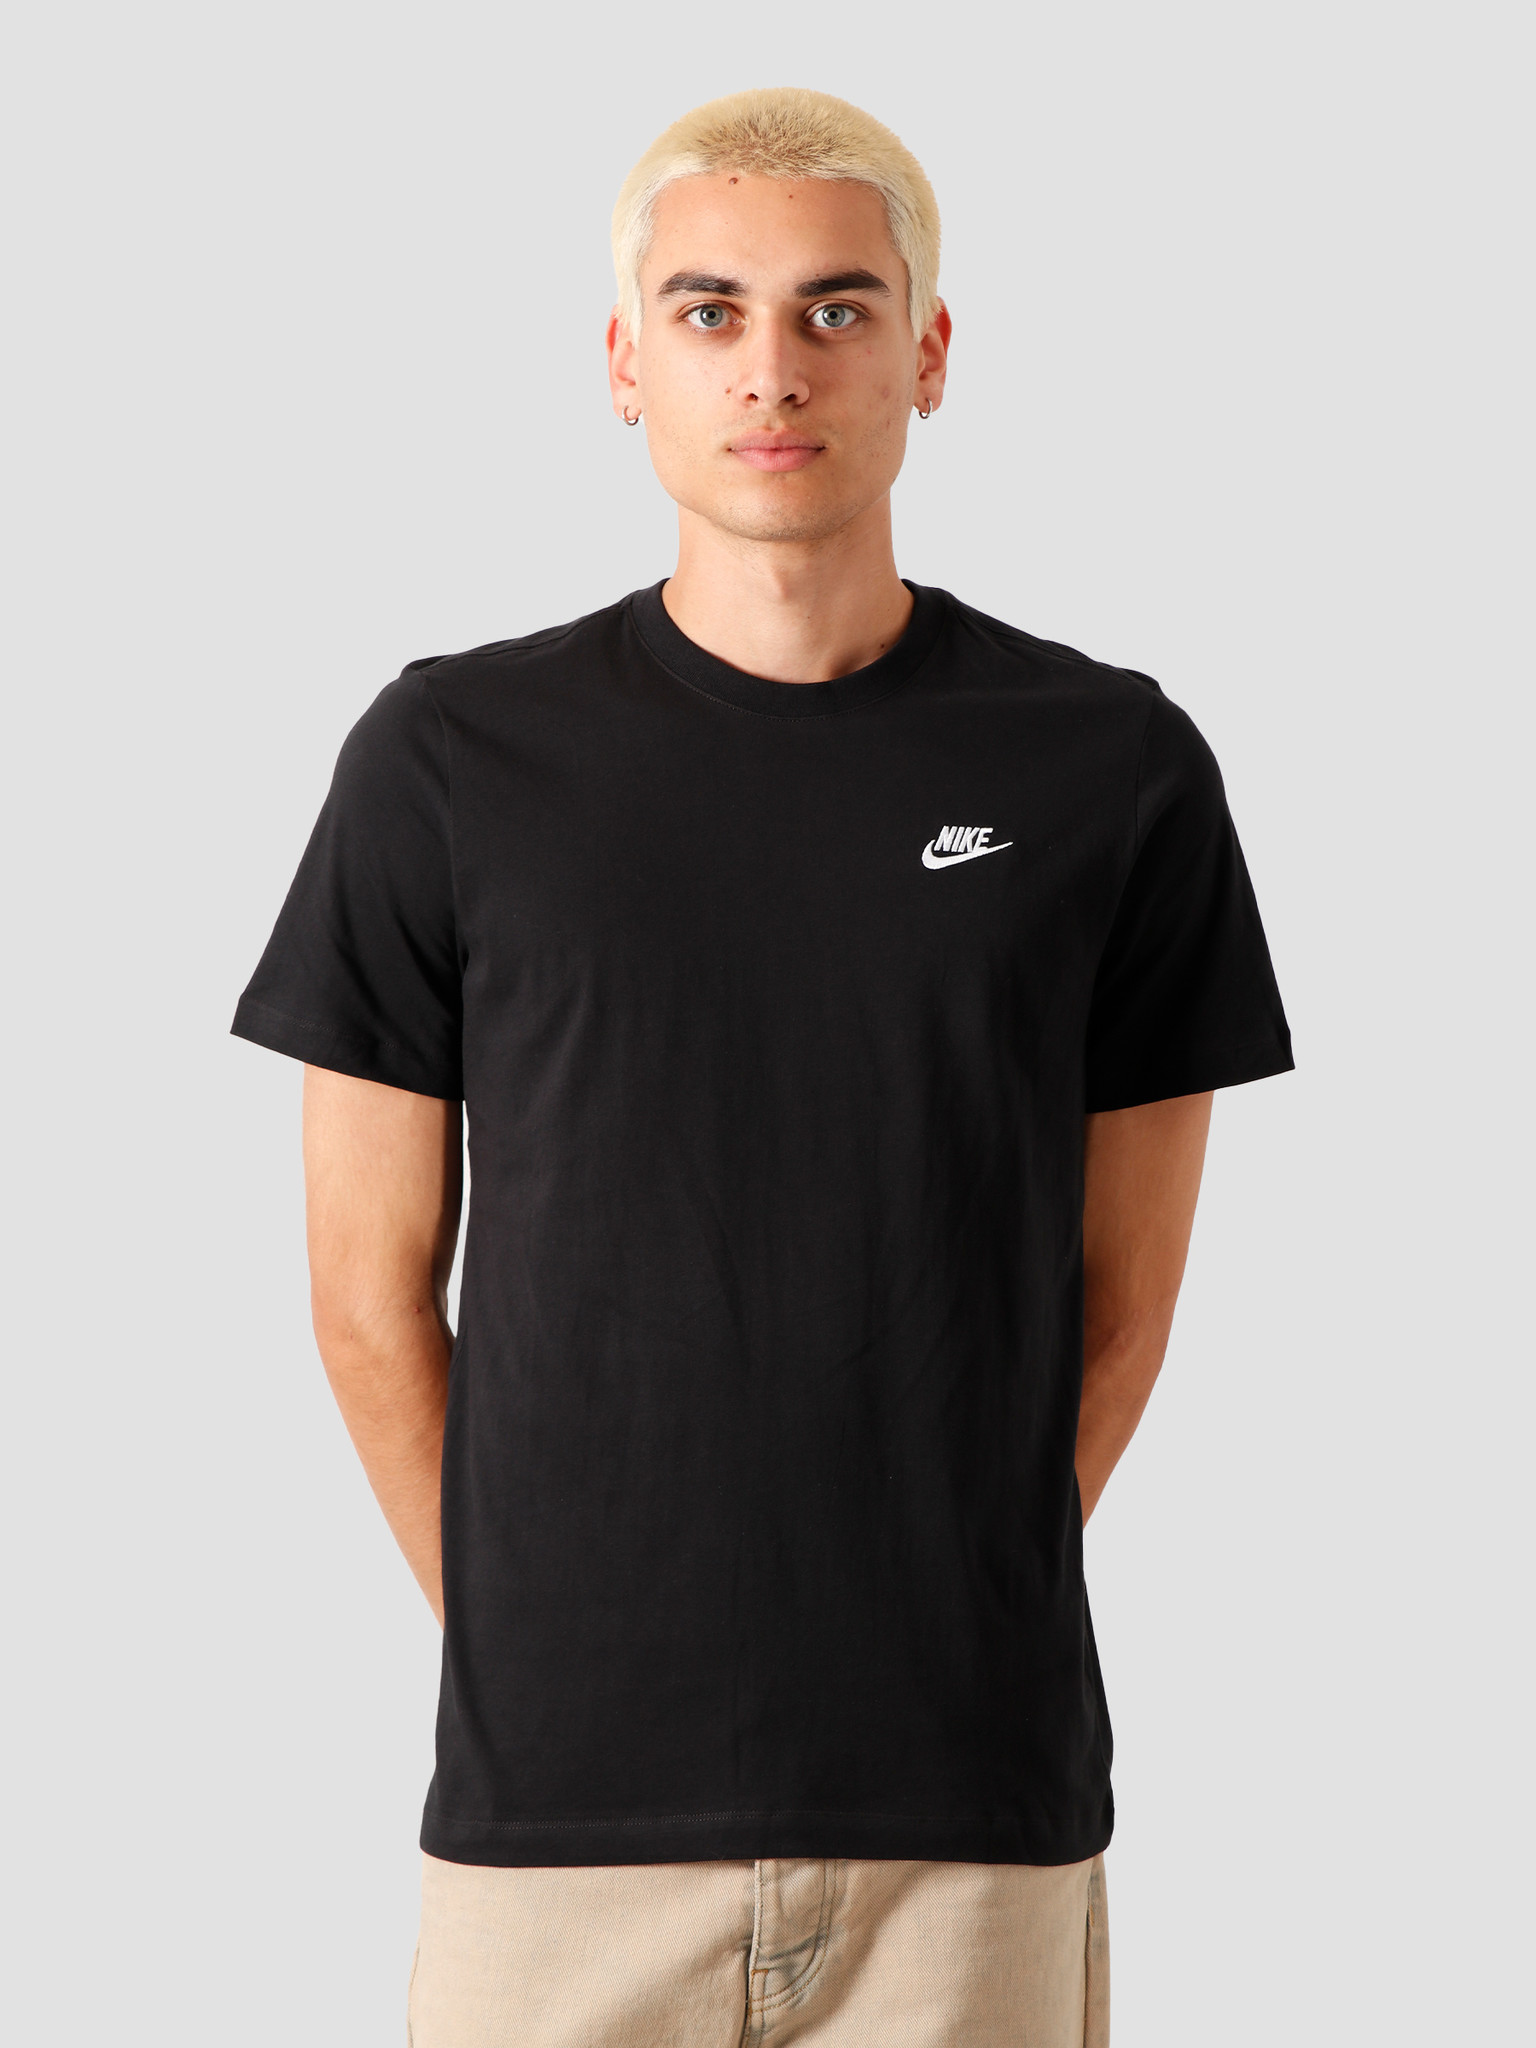 Nike Sportswear T-Shirt Black White Ar4997-013 | FRESHCOTTON